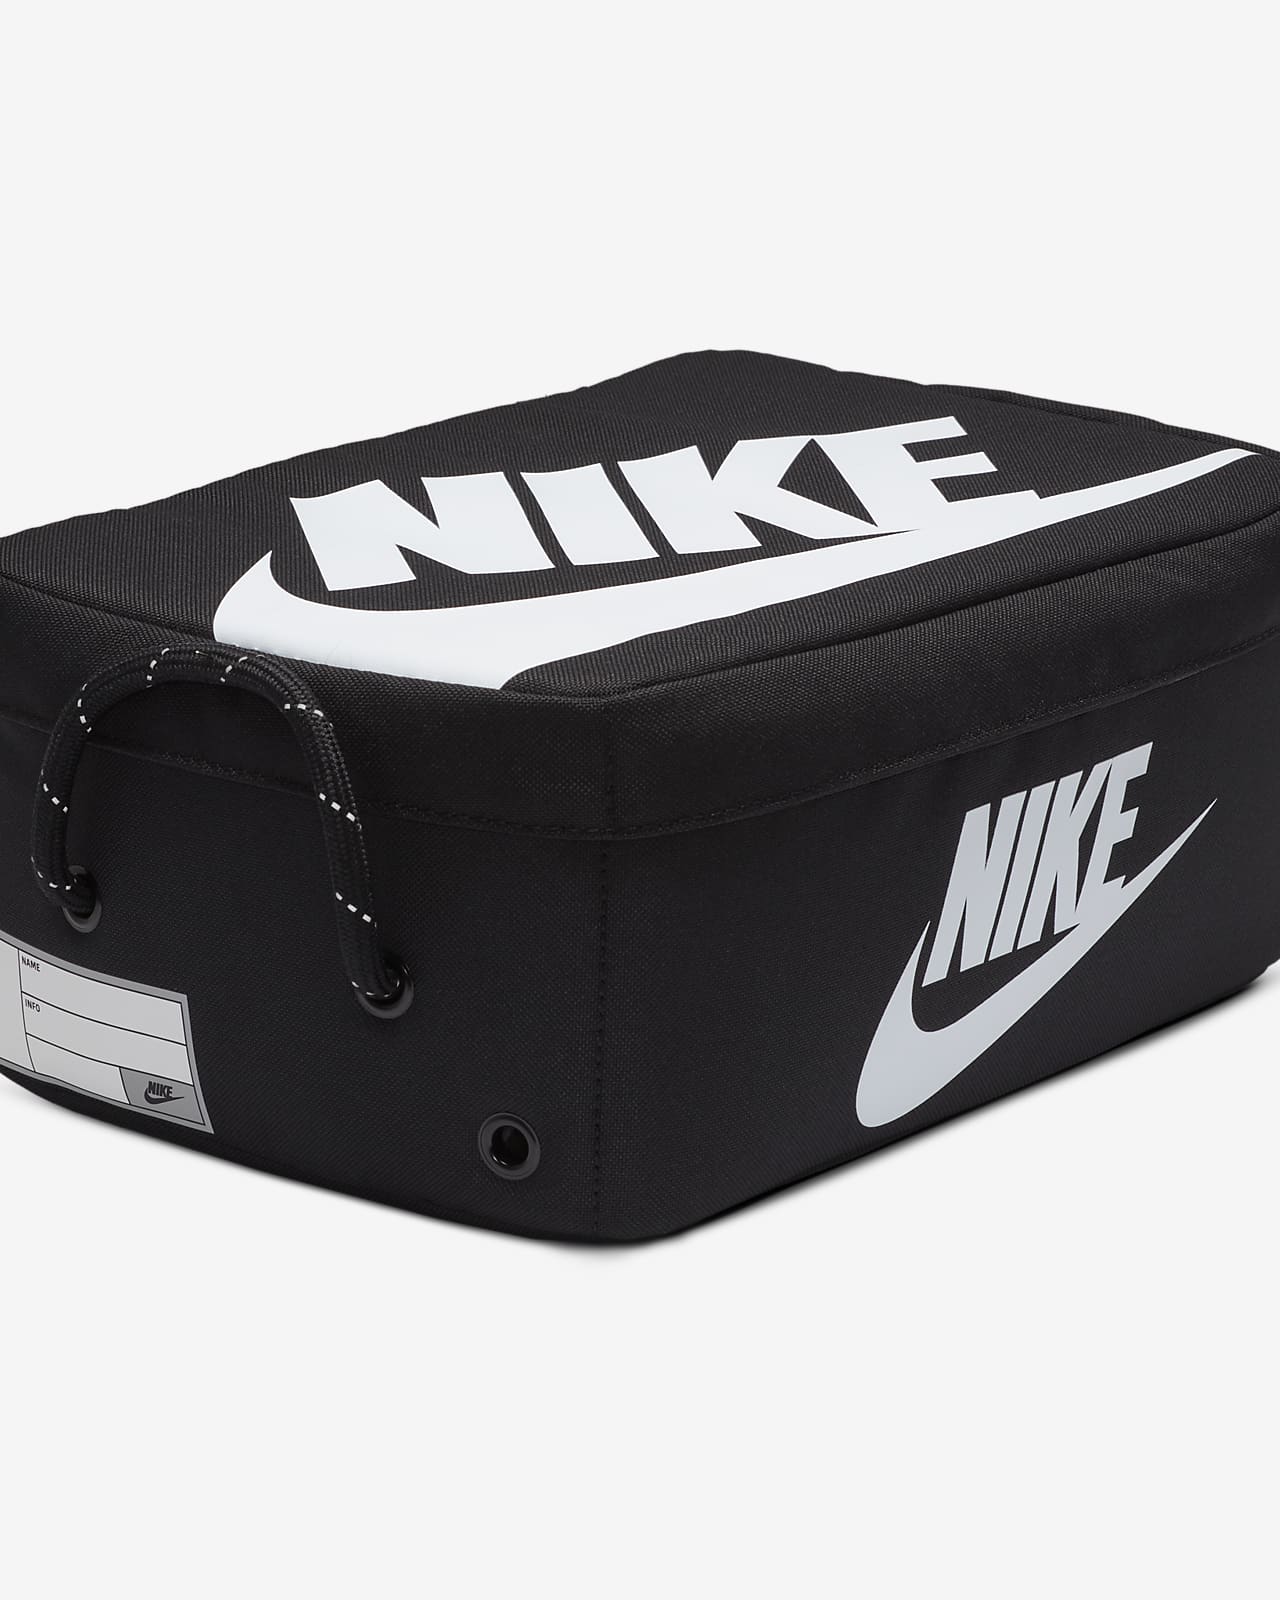 Nike Shoe Box Small Bag